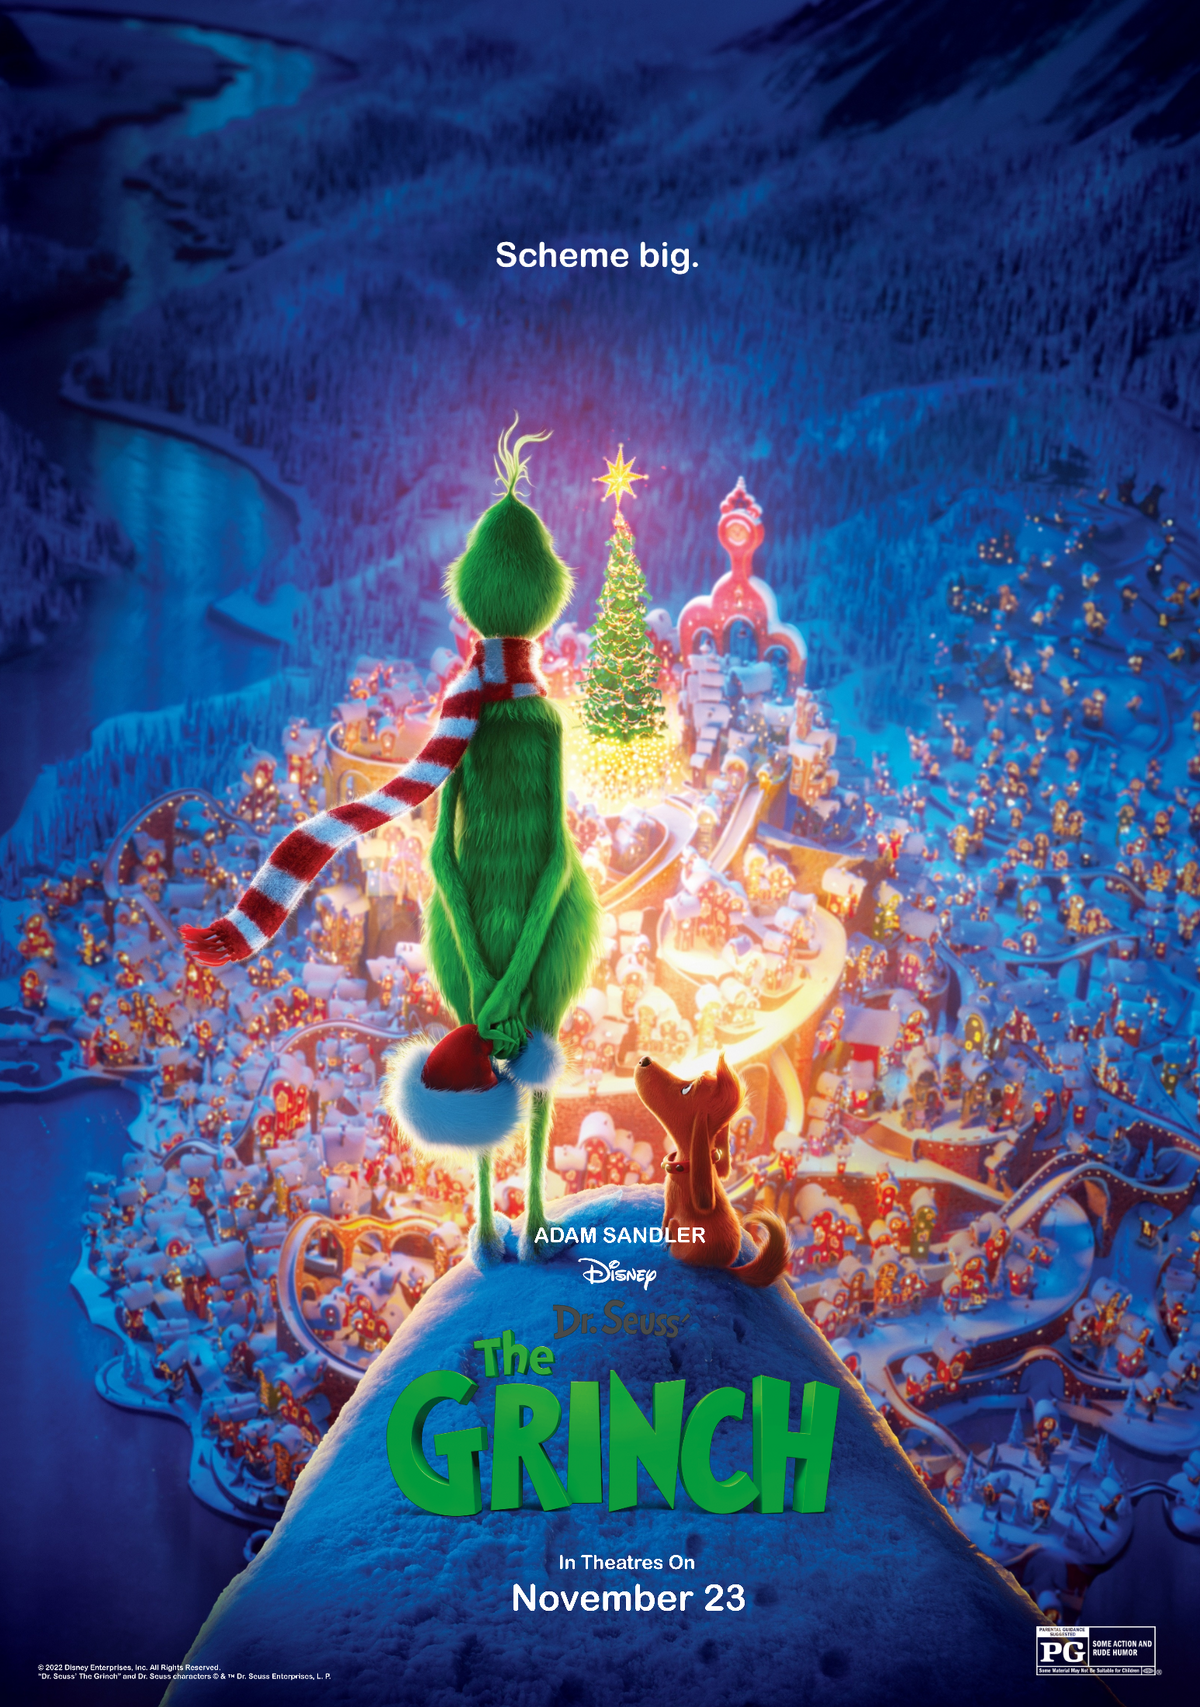 The Grinch (Disney version)